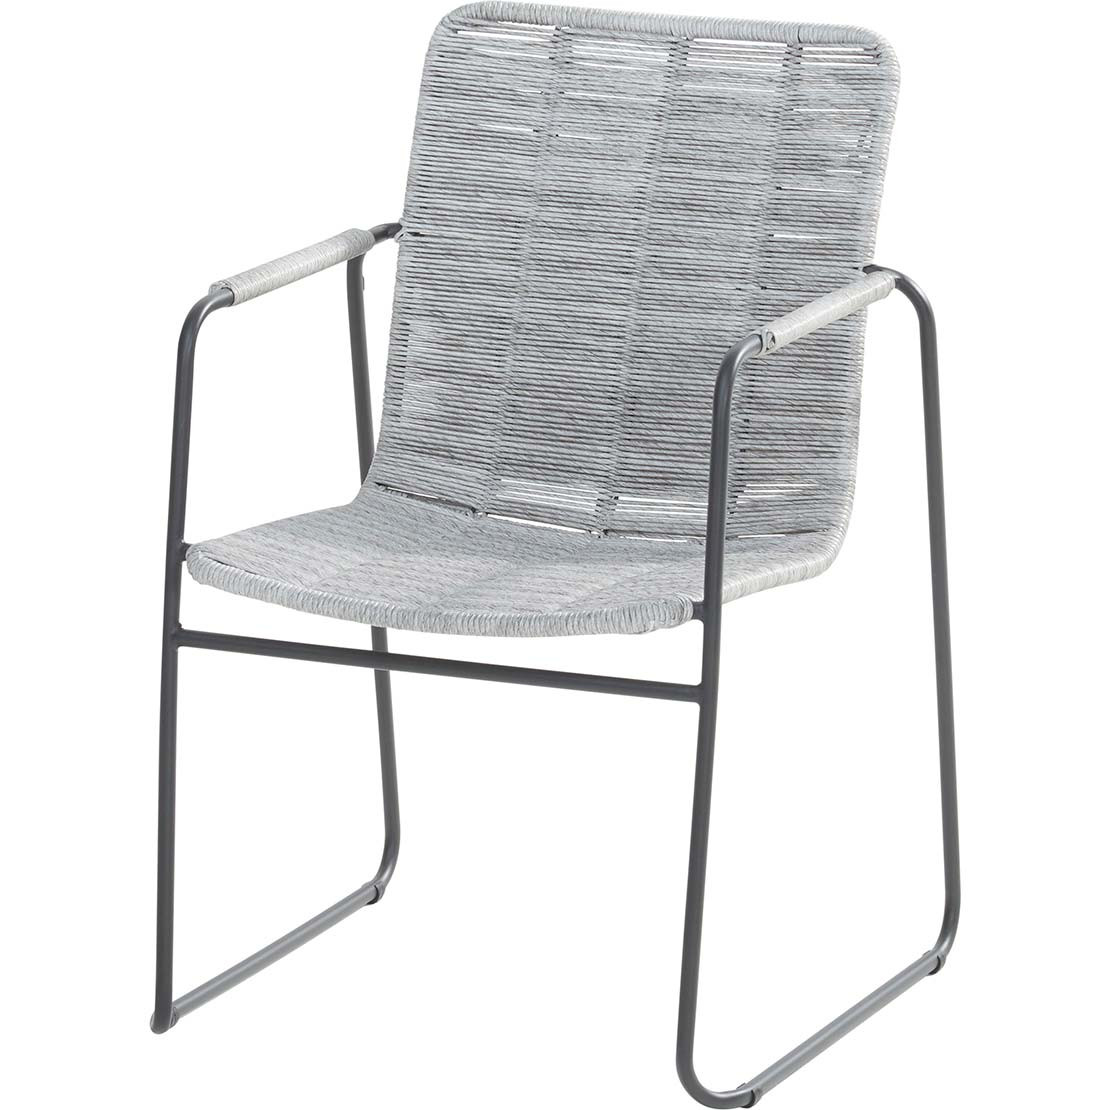 Palma stacking chair Light Grey